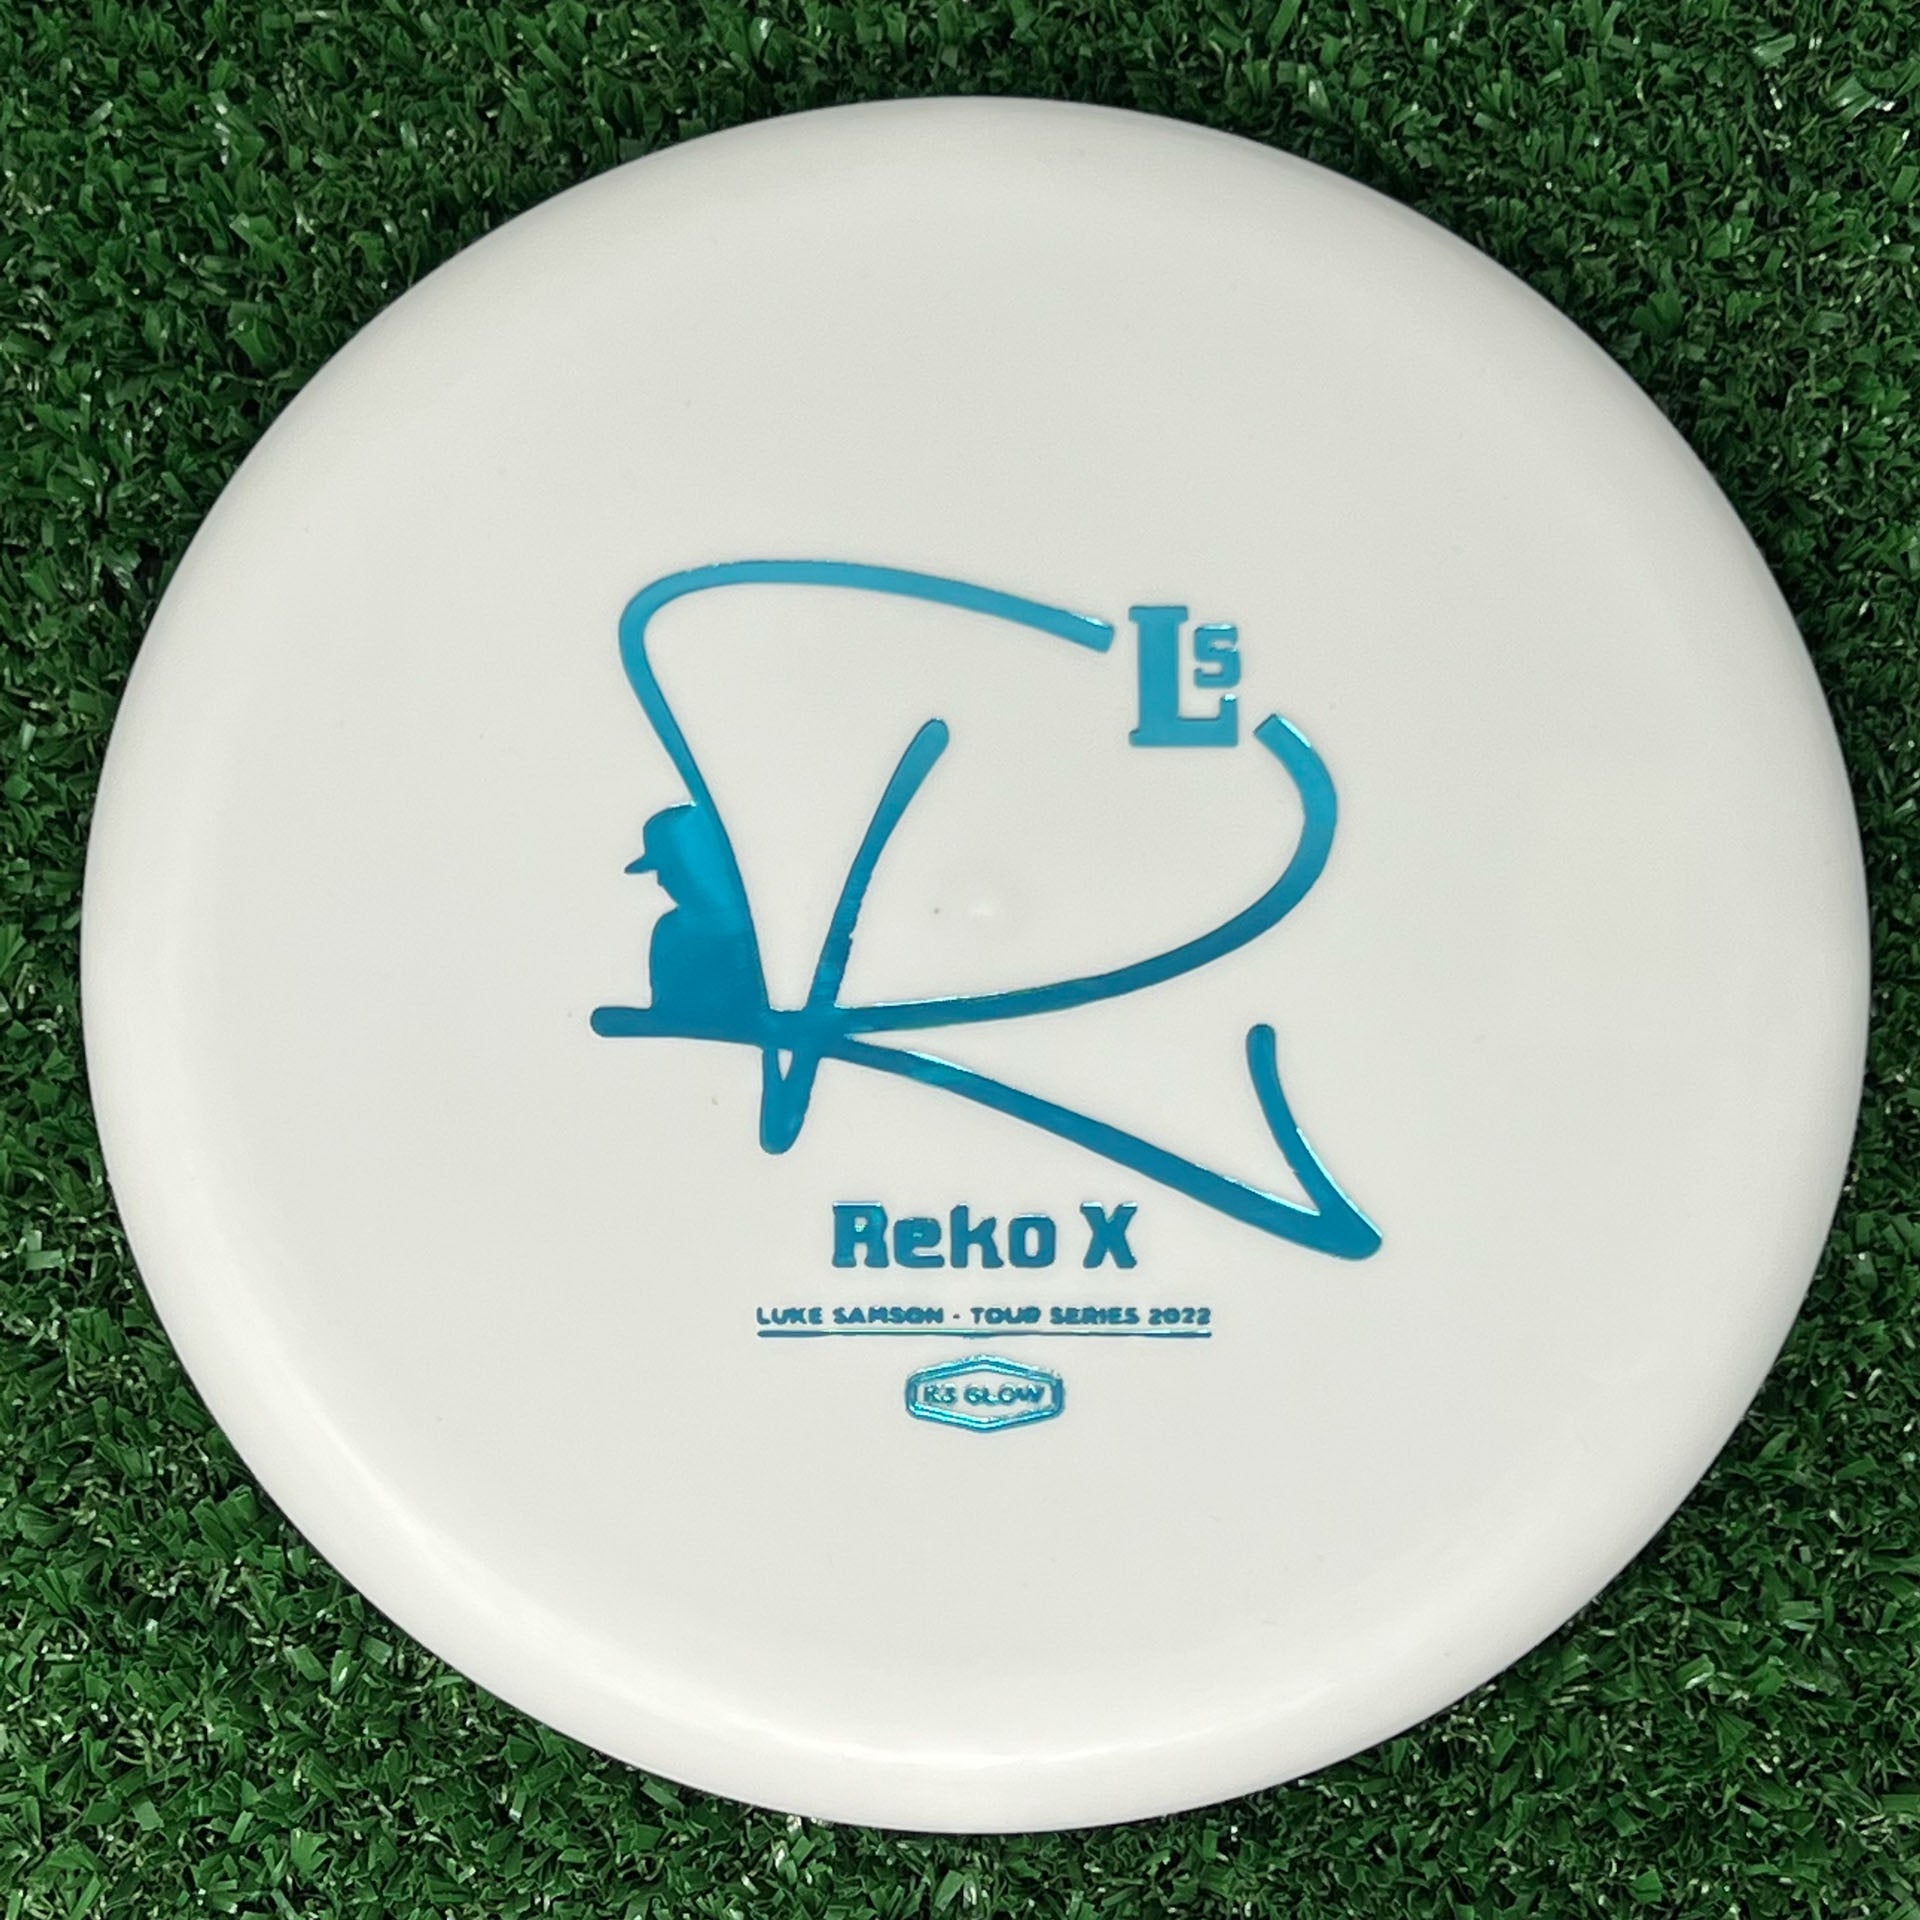 Kastaplast K3 Glow Reko X (Luke Samson Tour Series)